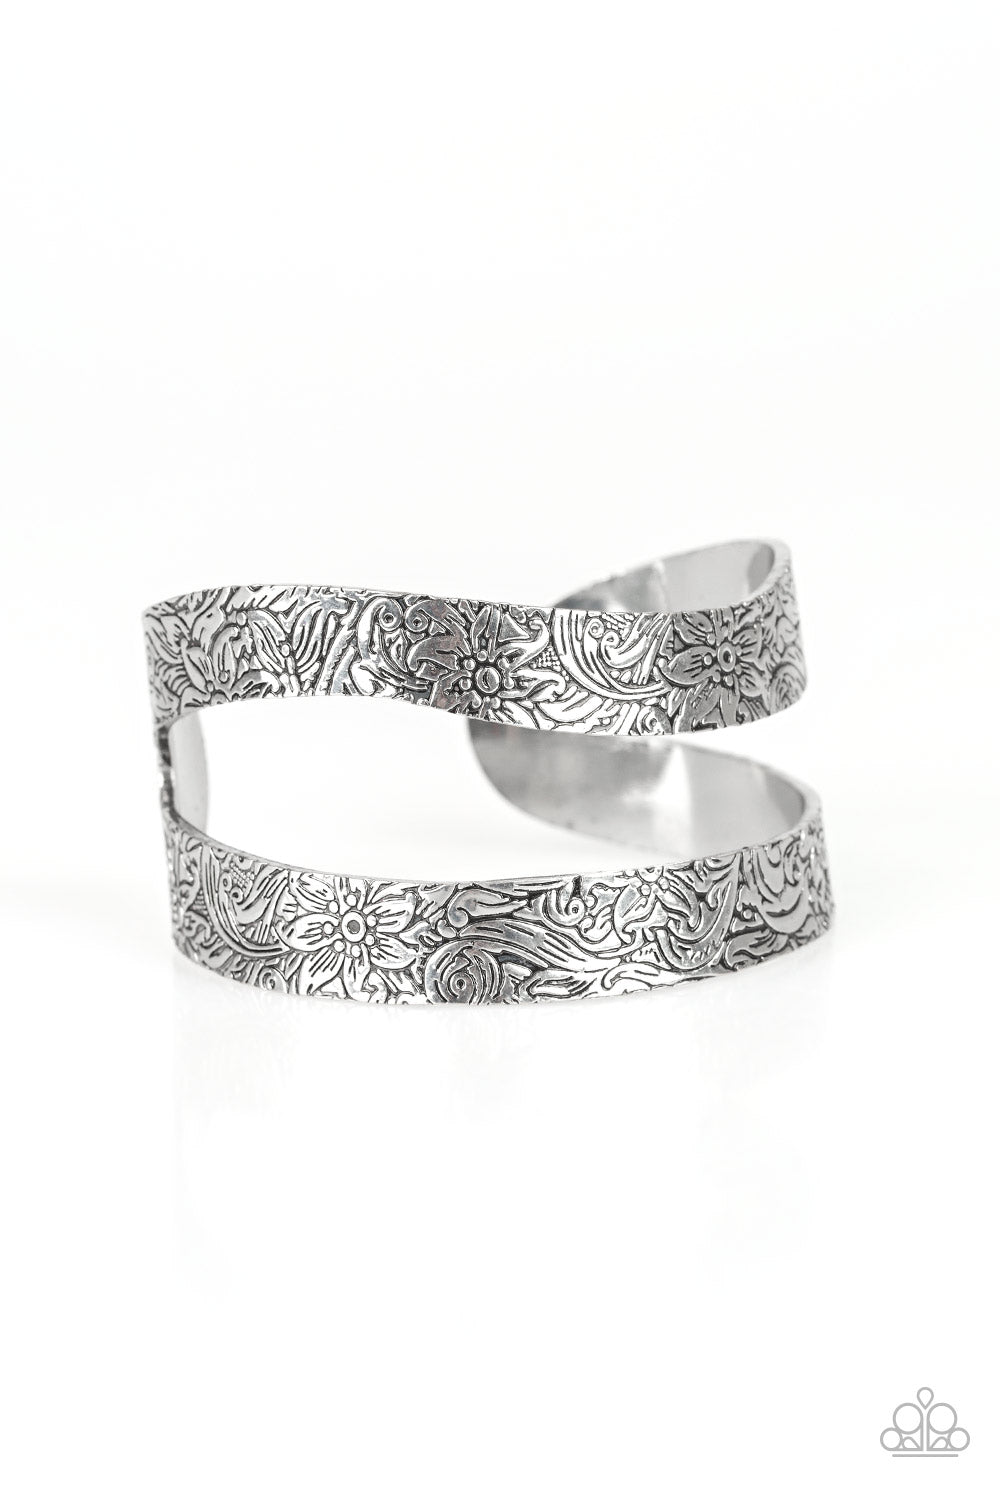 Garden Goddess Silver Bracelet - Paparazzi Accessories 